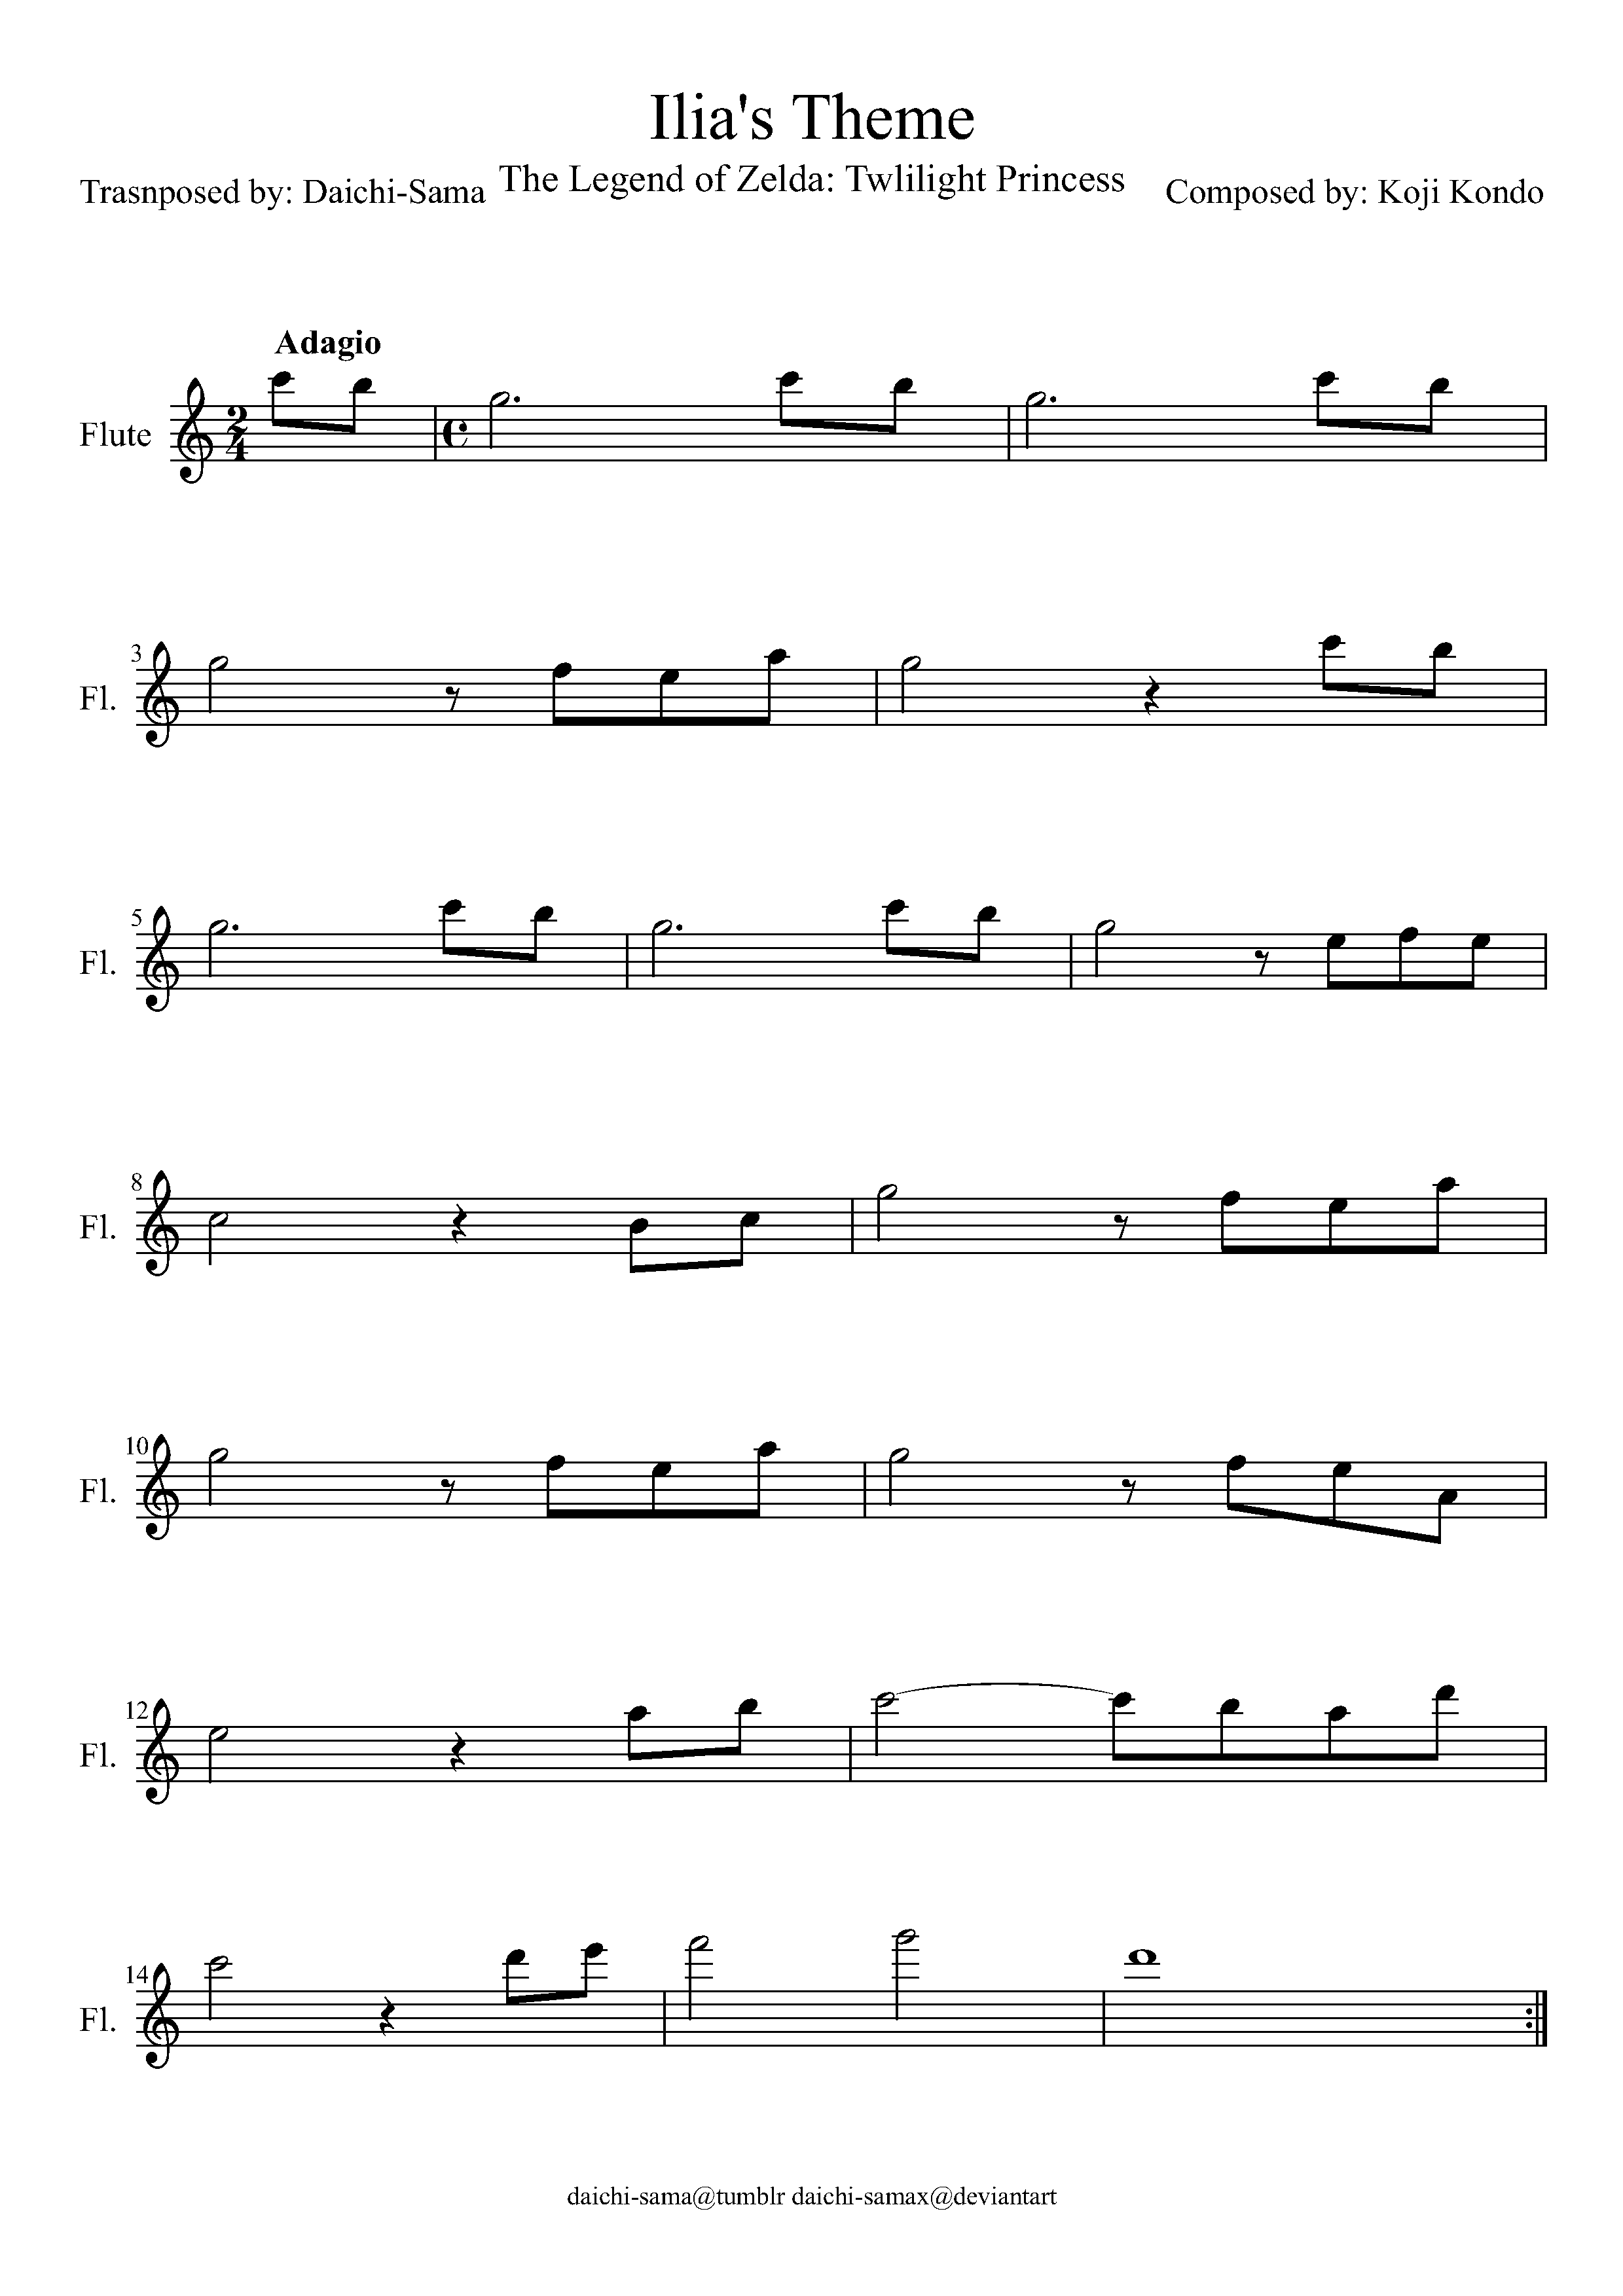 Ilia's Theme Flute Sheet Music by drakon-thedragon on 